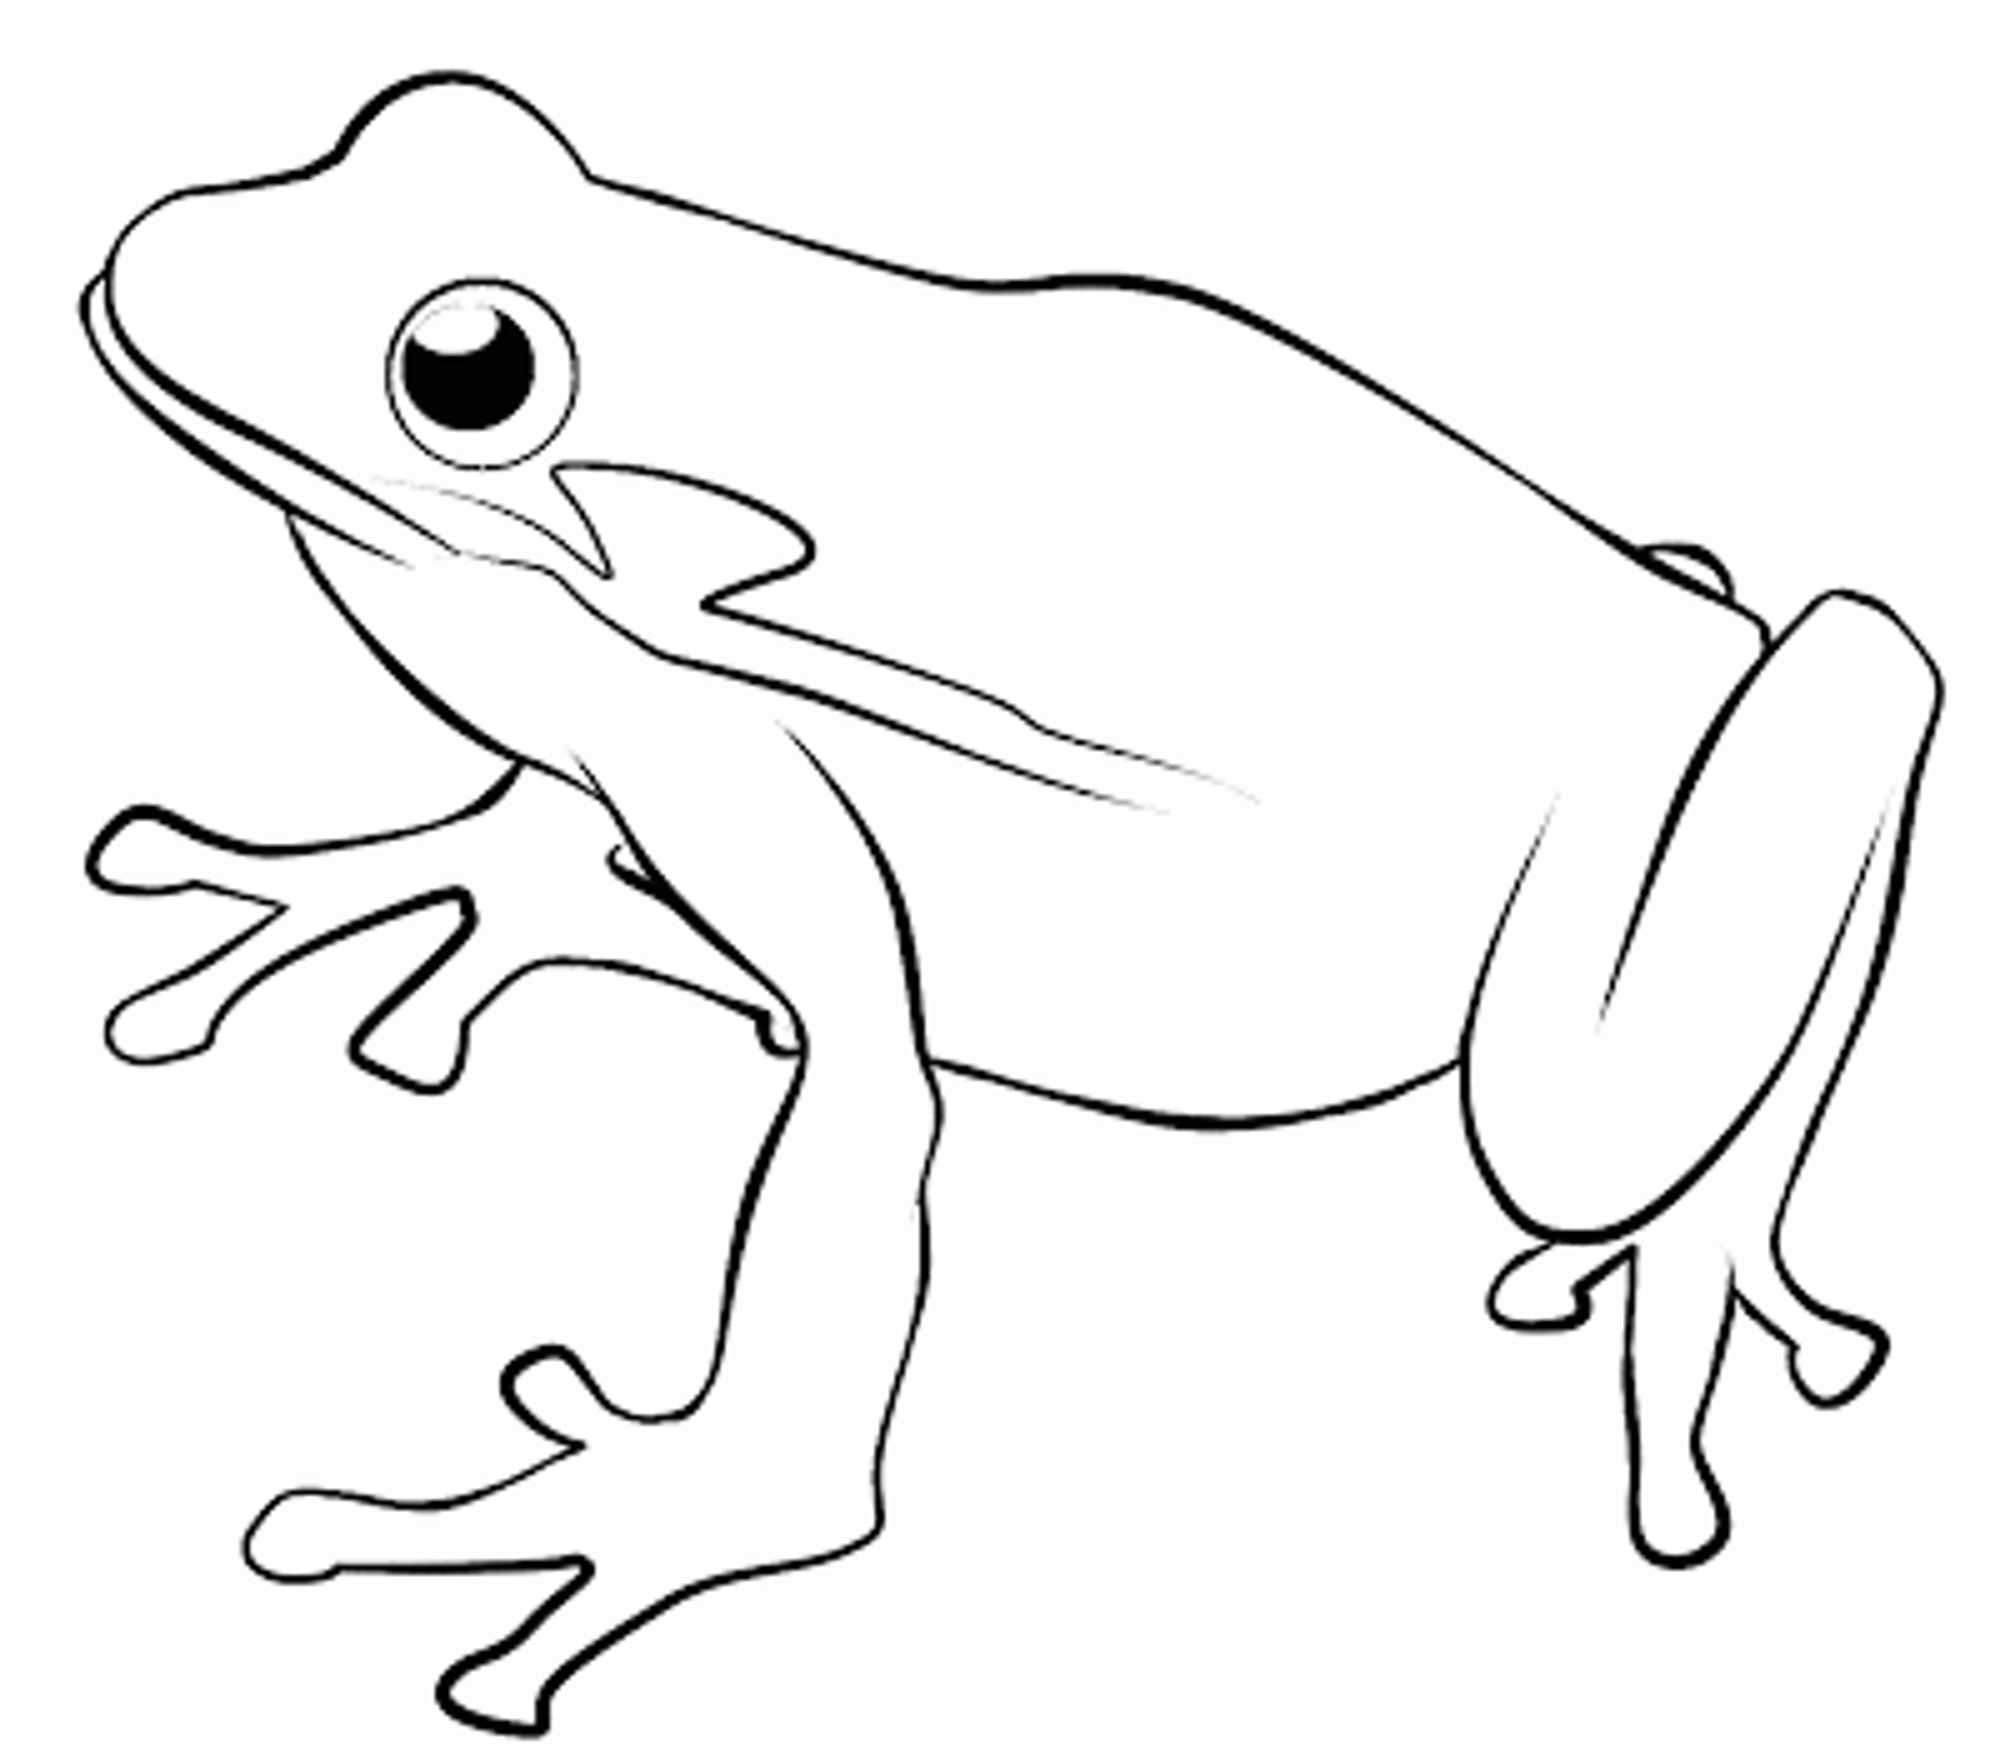 frog-coloring-pages-for-kids | | BestAppsForKids.com